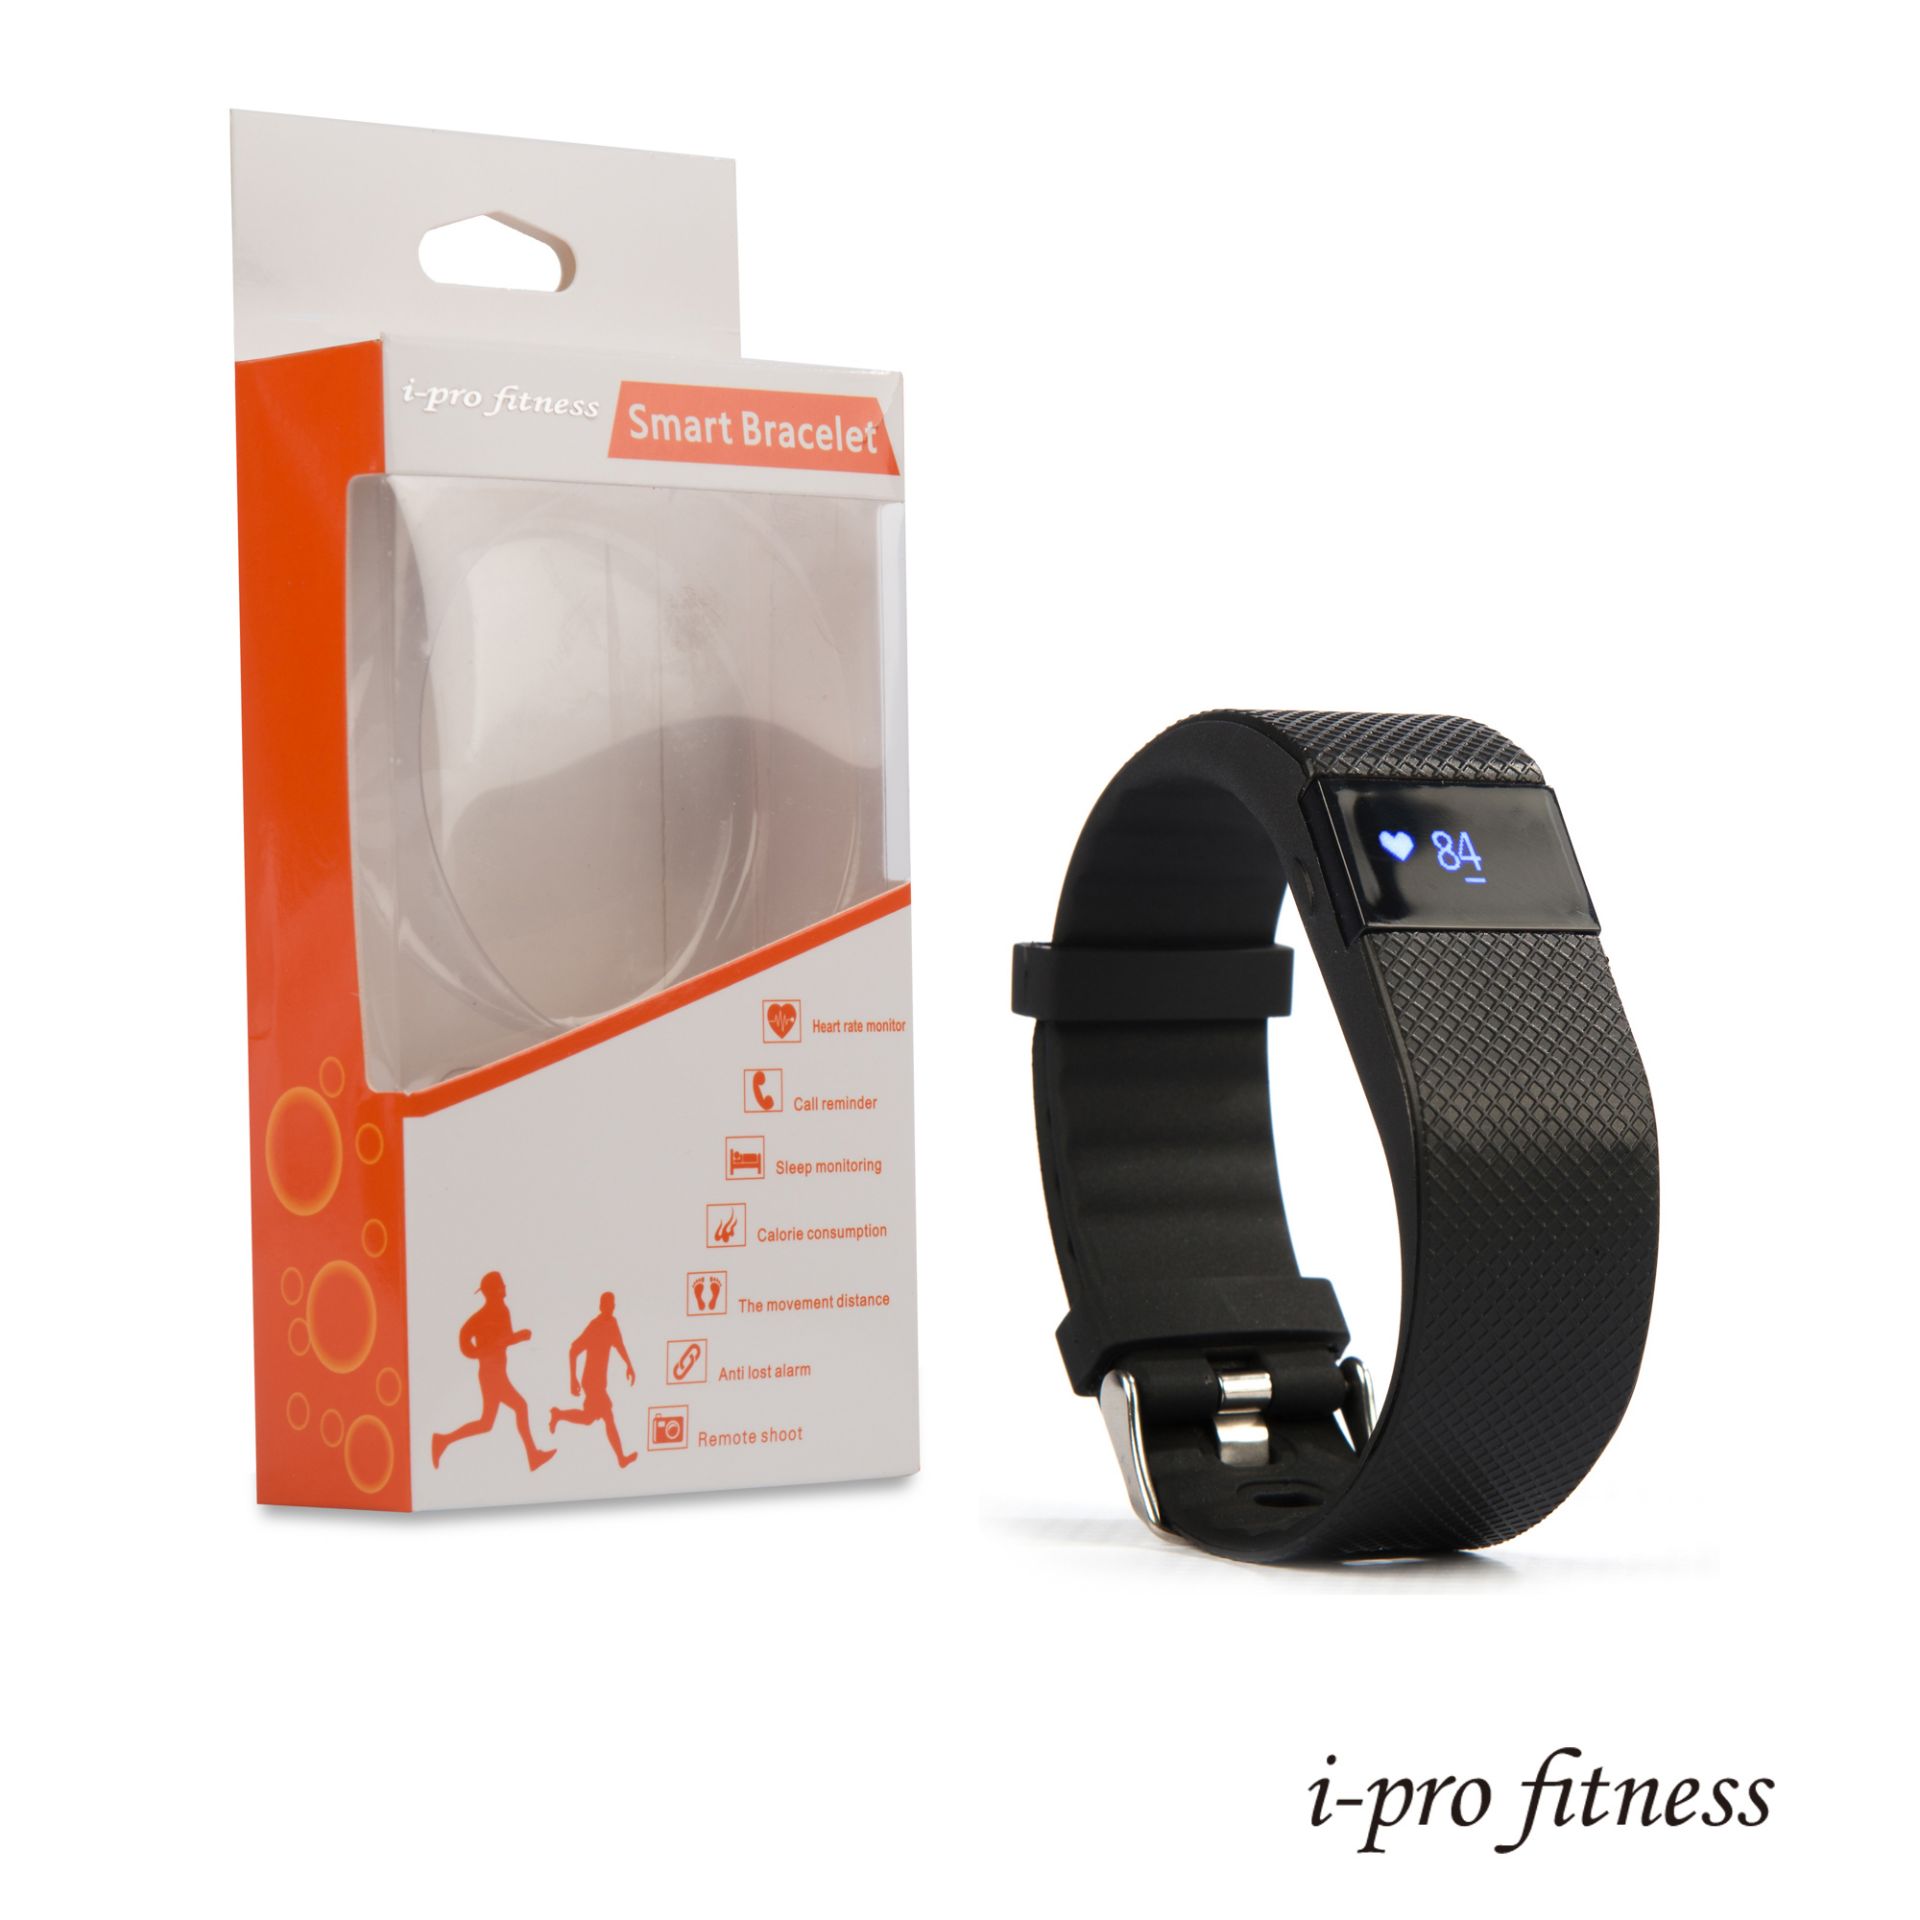 Fitness Tracker i-pro fitness, Bluetooth 4.0 Sports Smart Bracelet, Heart Rate Monitor - Image 3 of 8